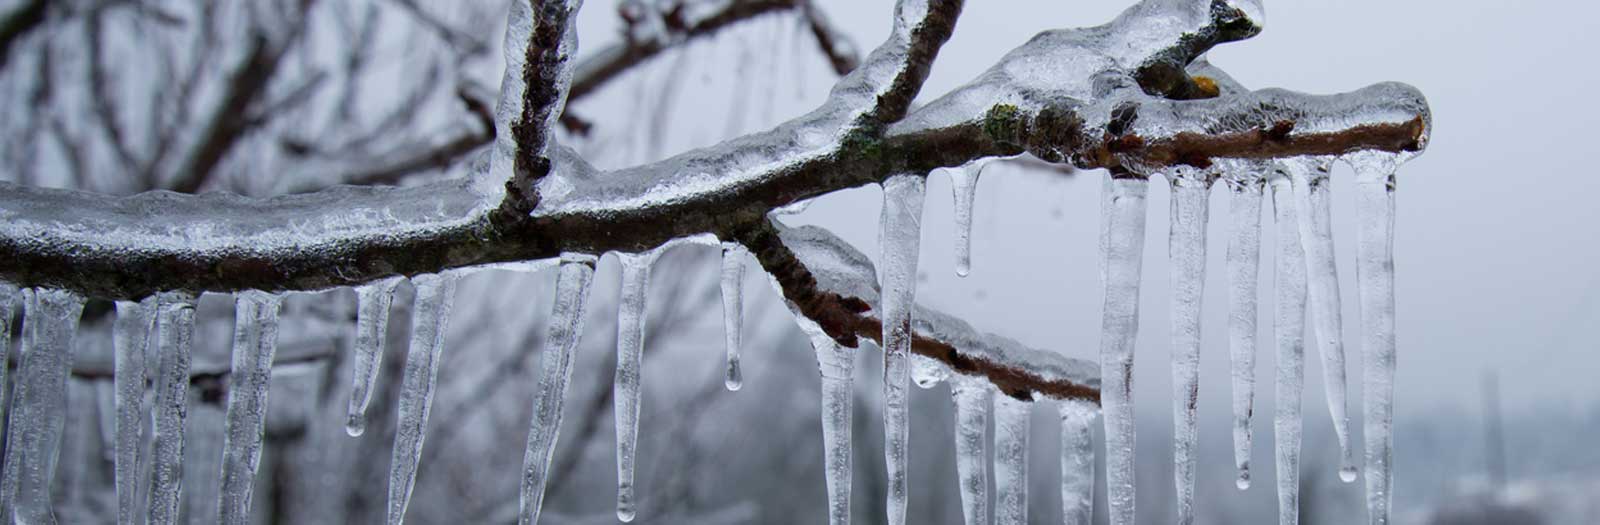 Protecting Tree Limbs from Freezing Rain